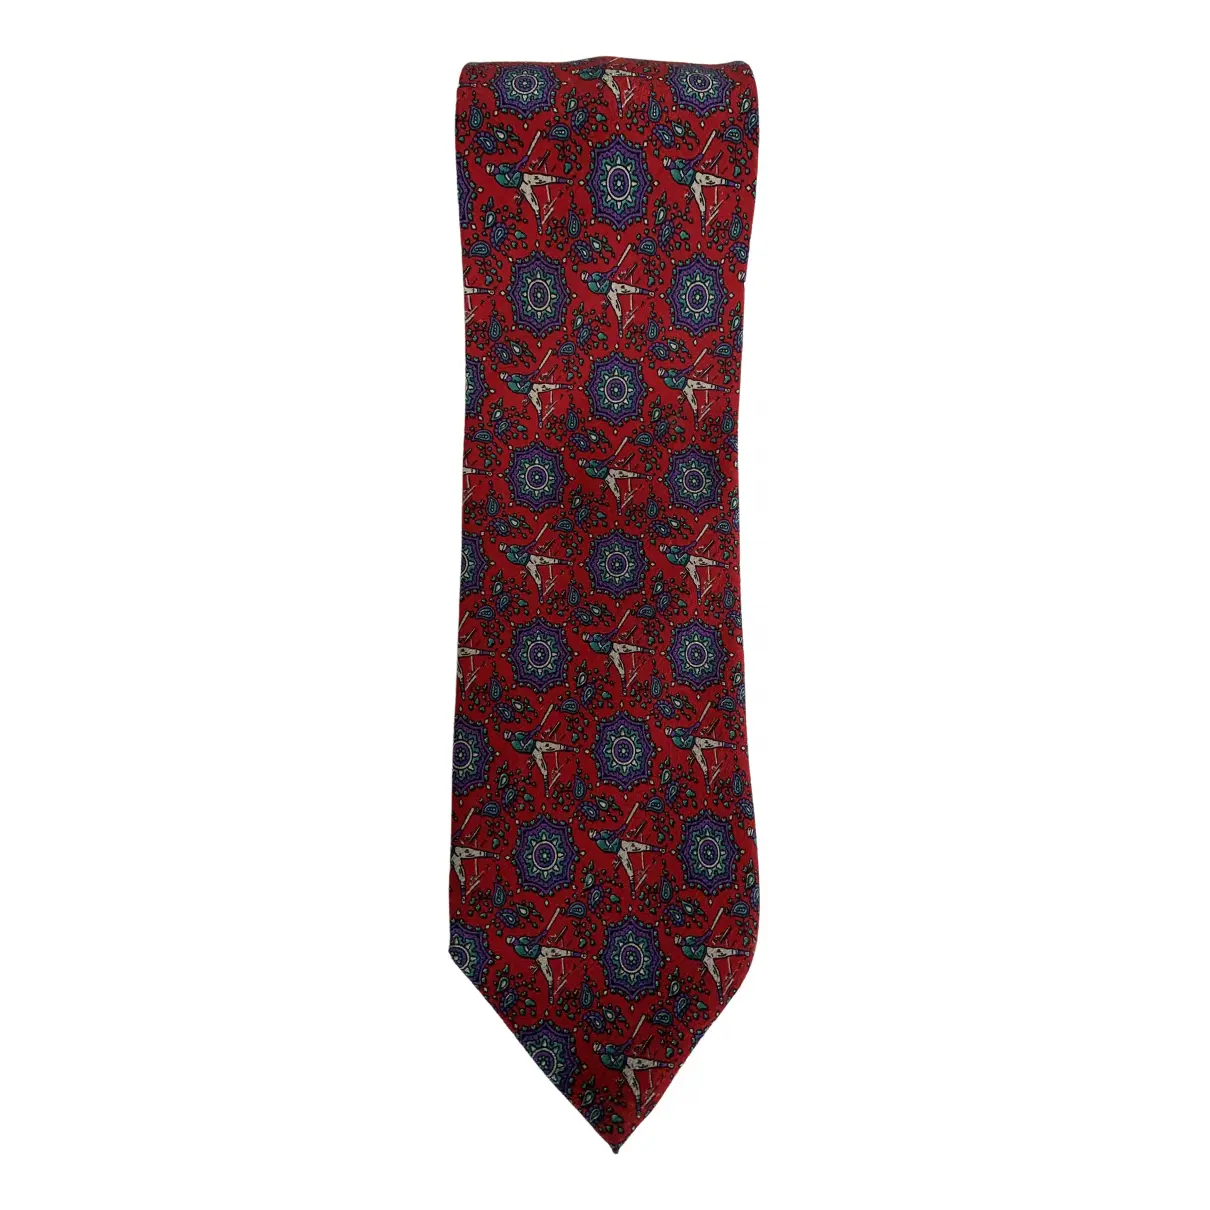 Silk tie Guy Laroche - Vintage